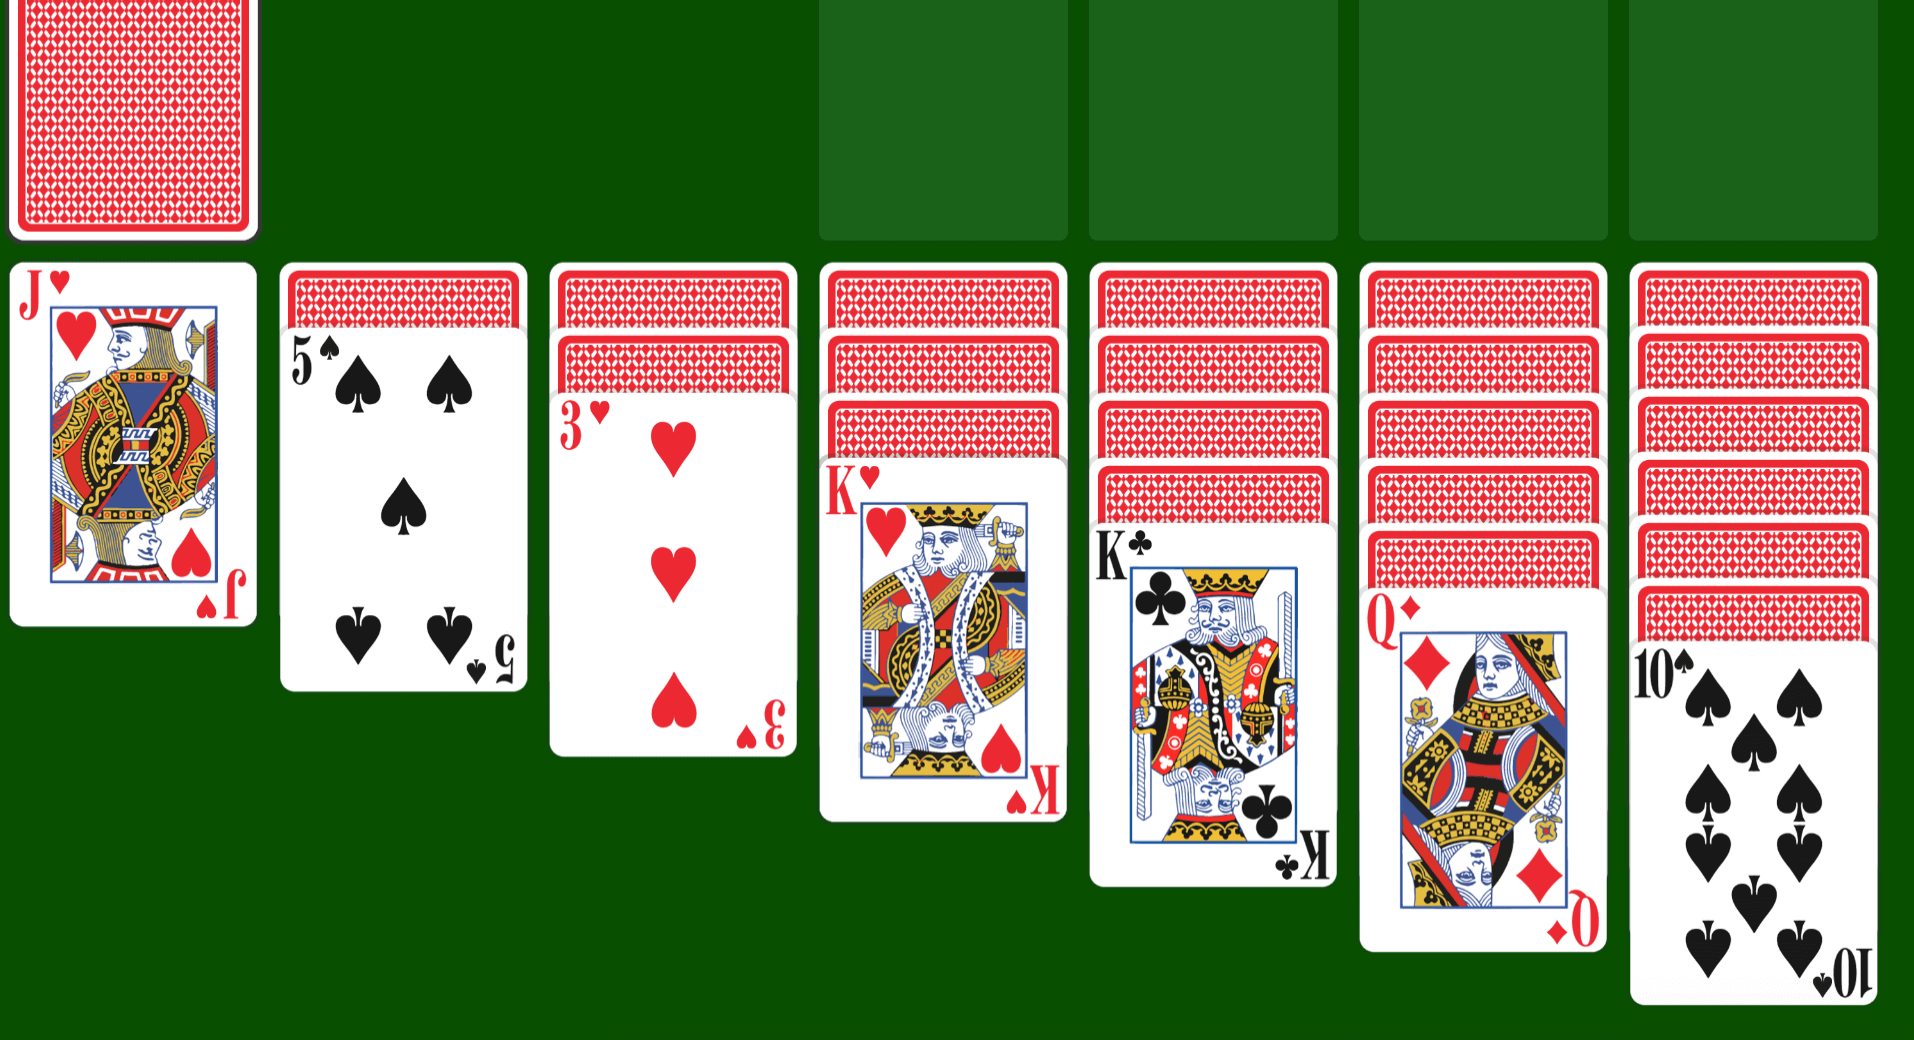 Msn spades  noccaconvi1989's Ownd